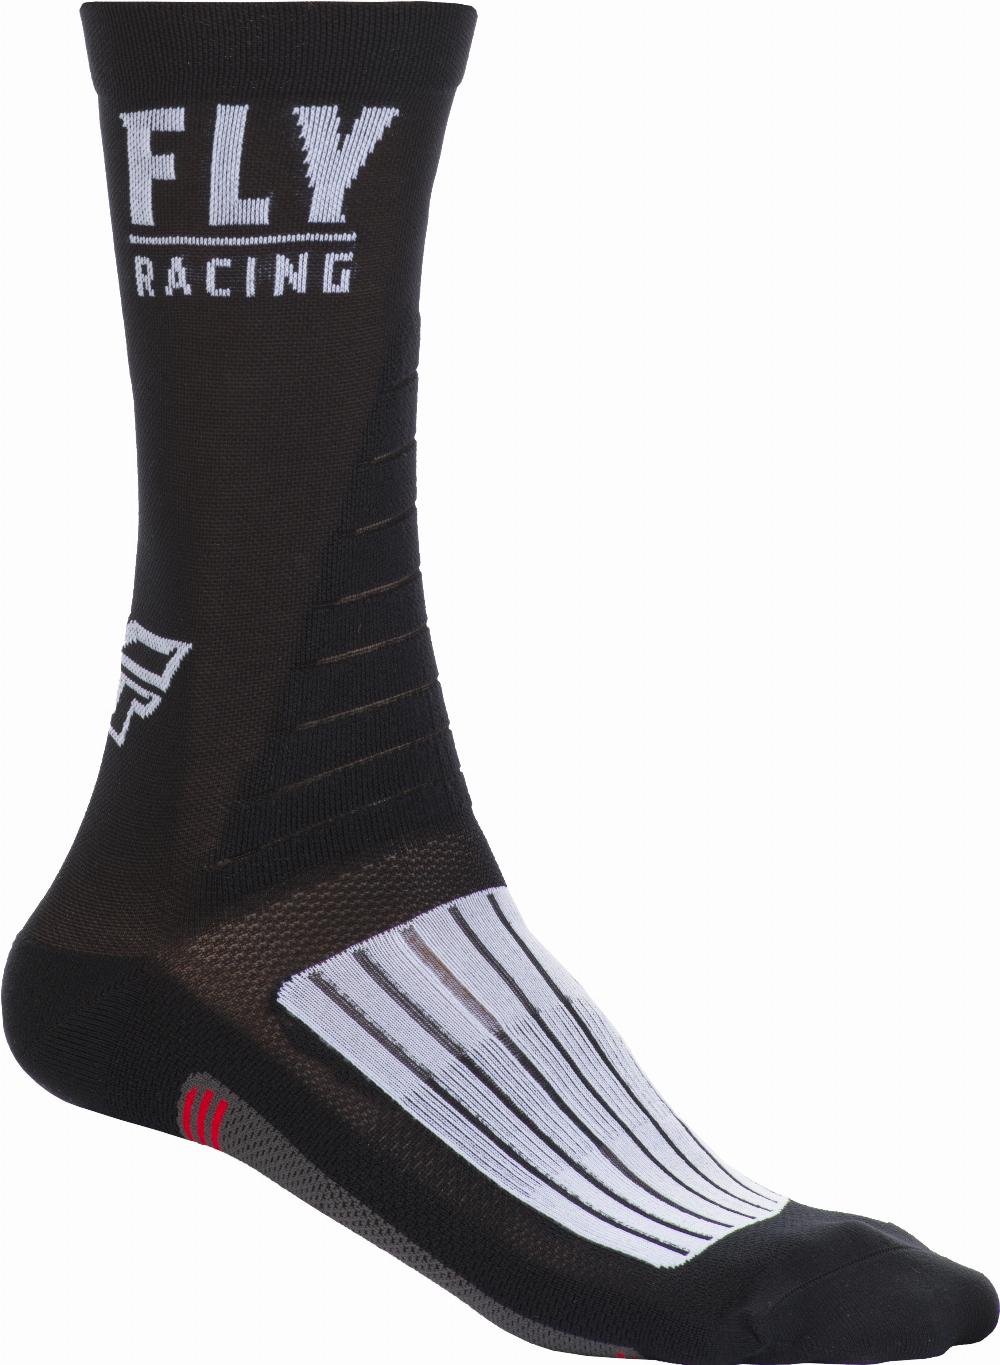 Fly Racing Factory Rider Socks #SPX009600-A2